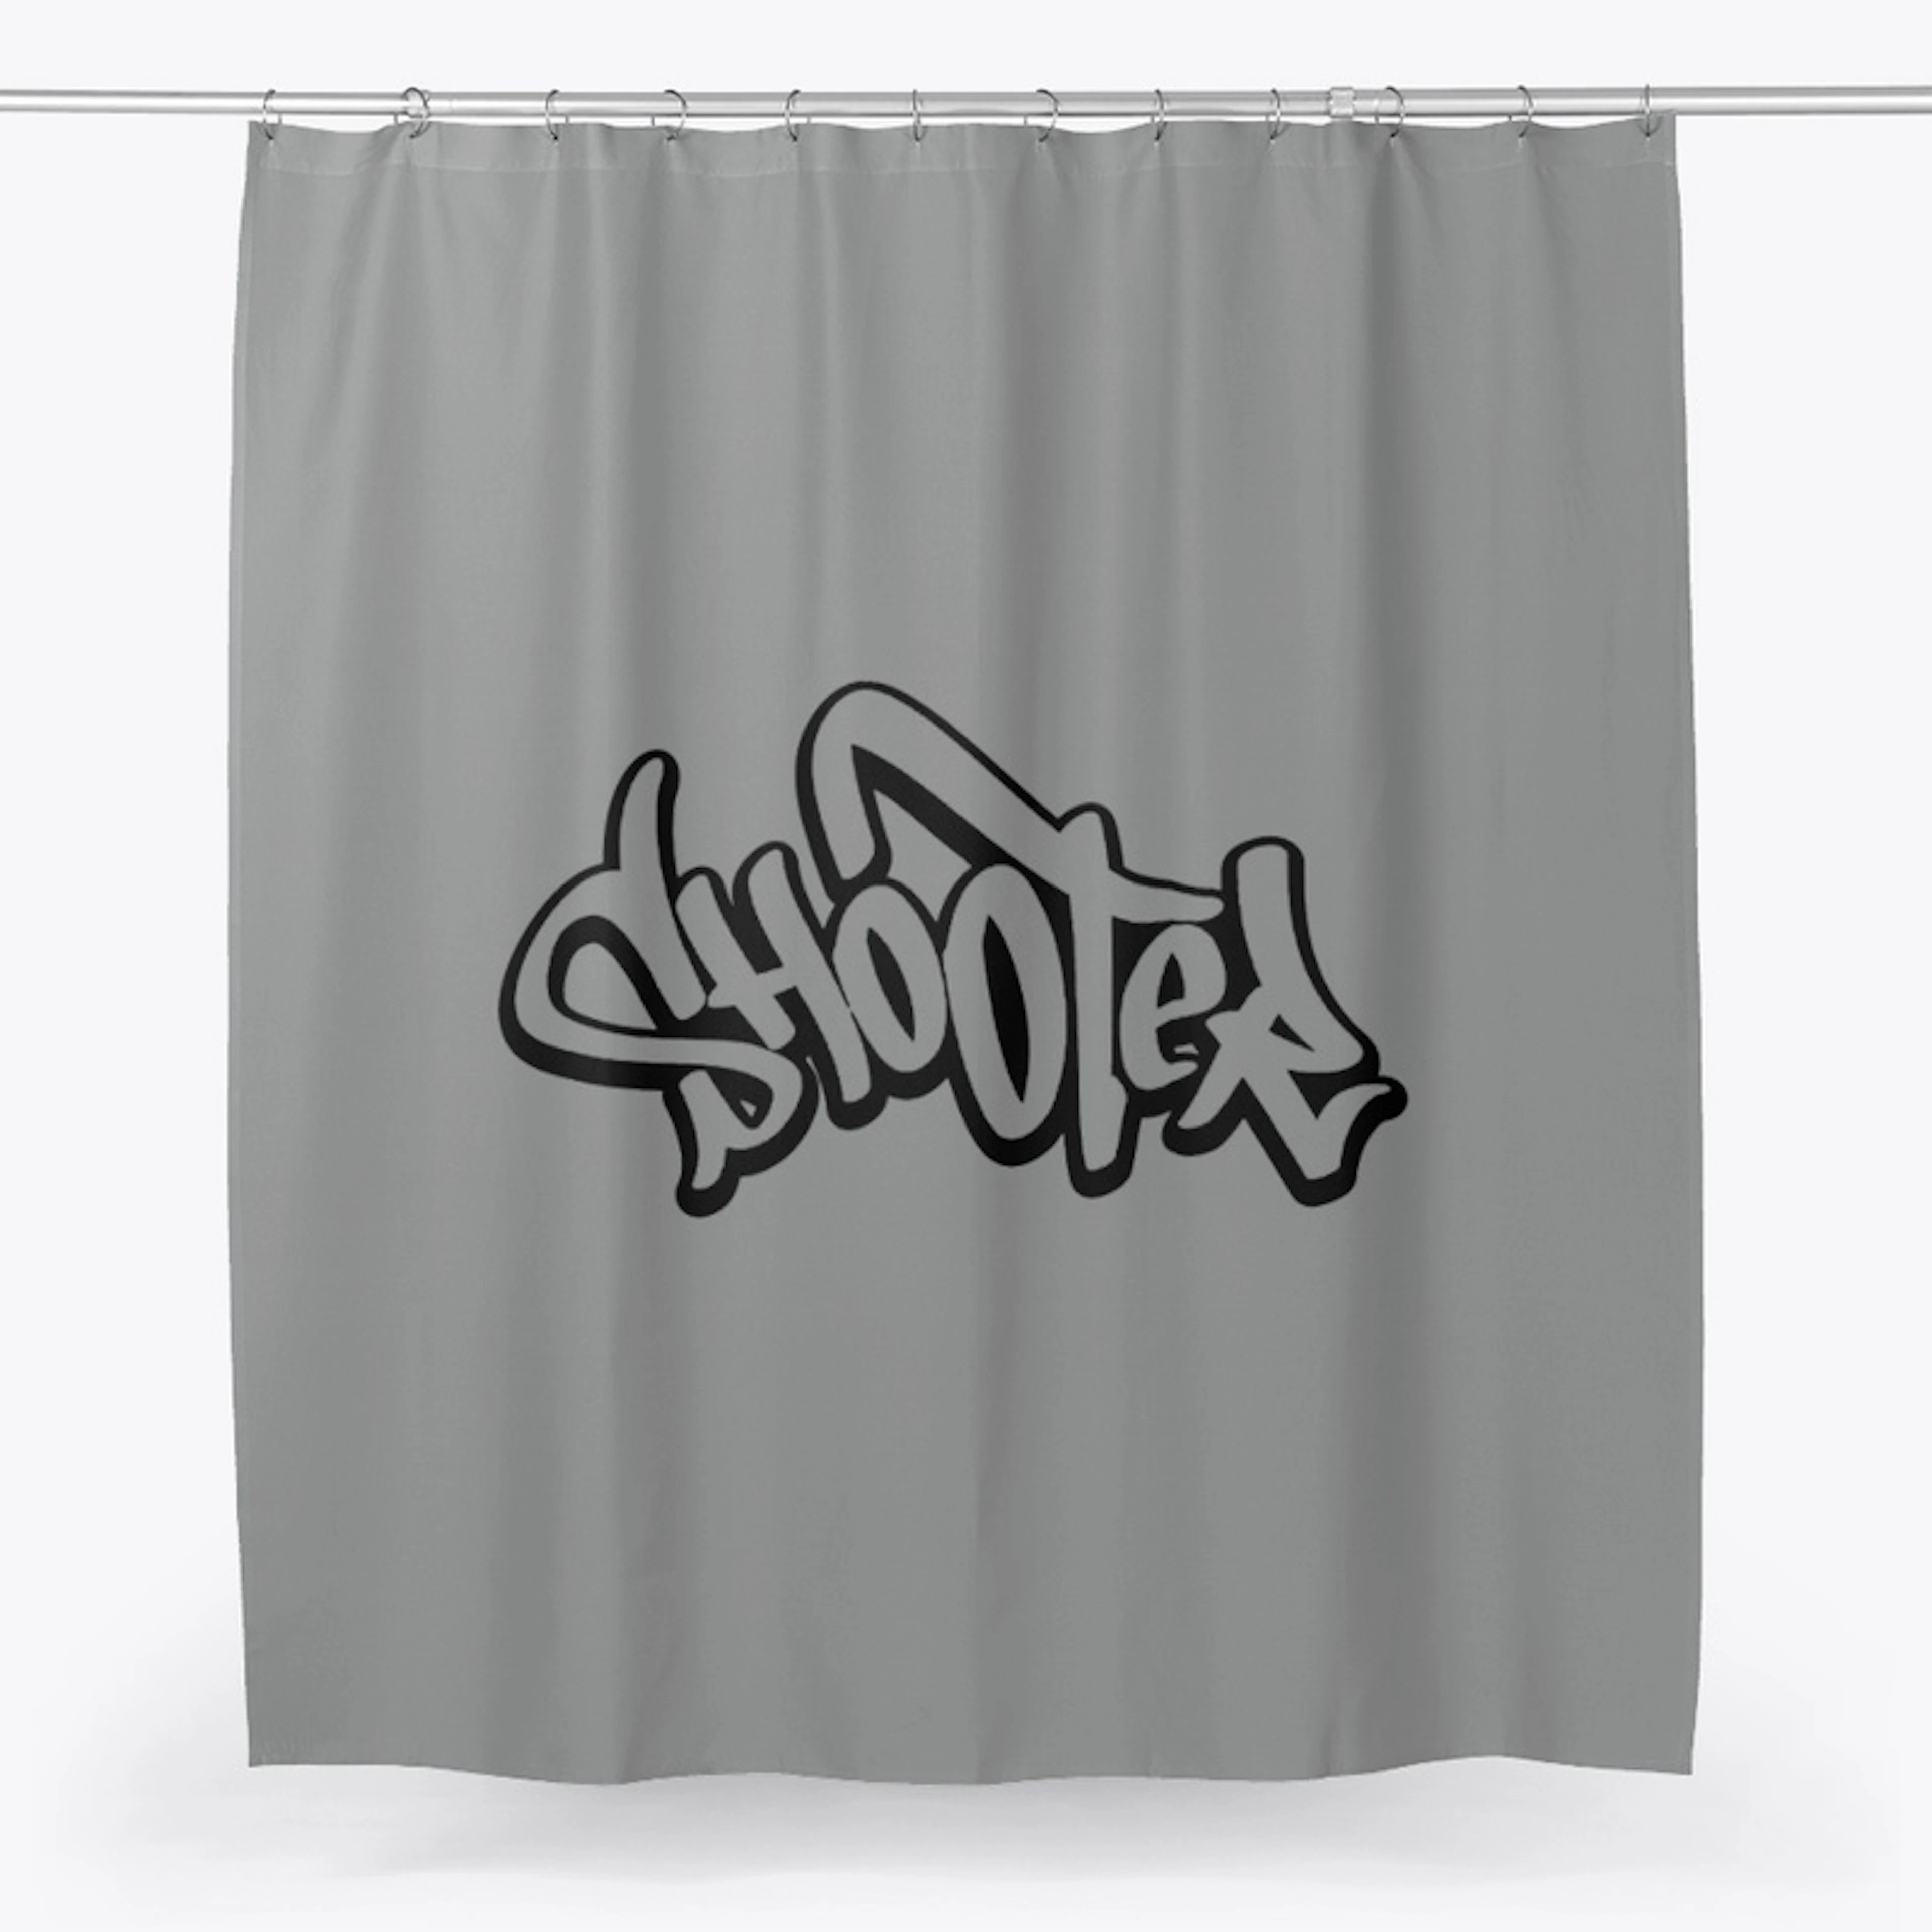 Sho0ter Shower Curtain